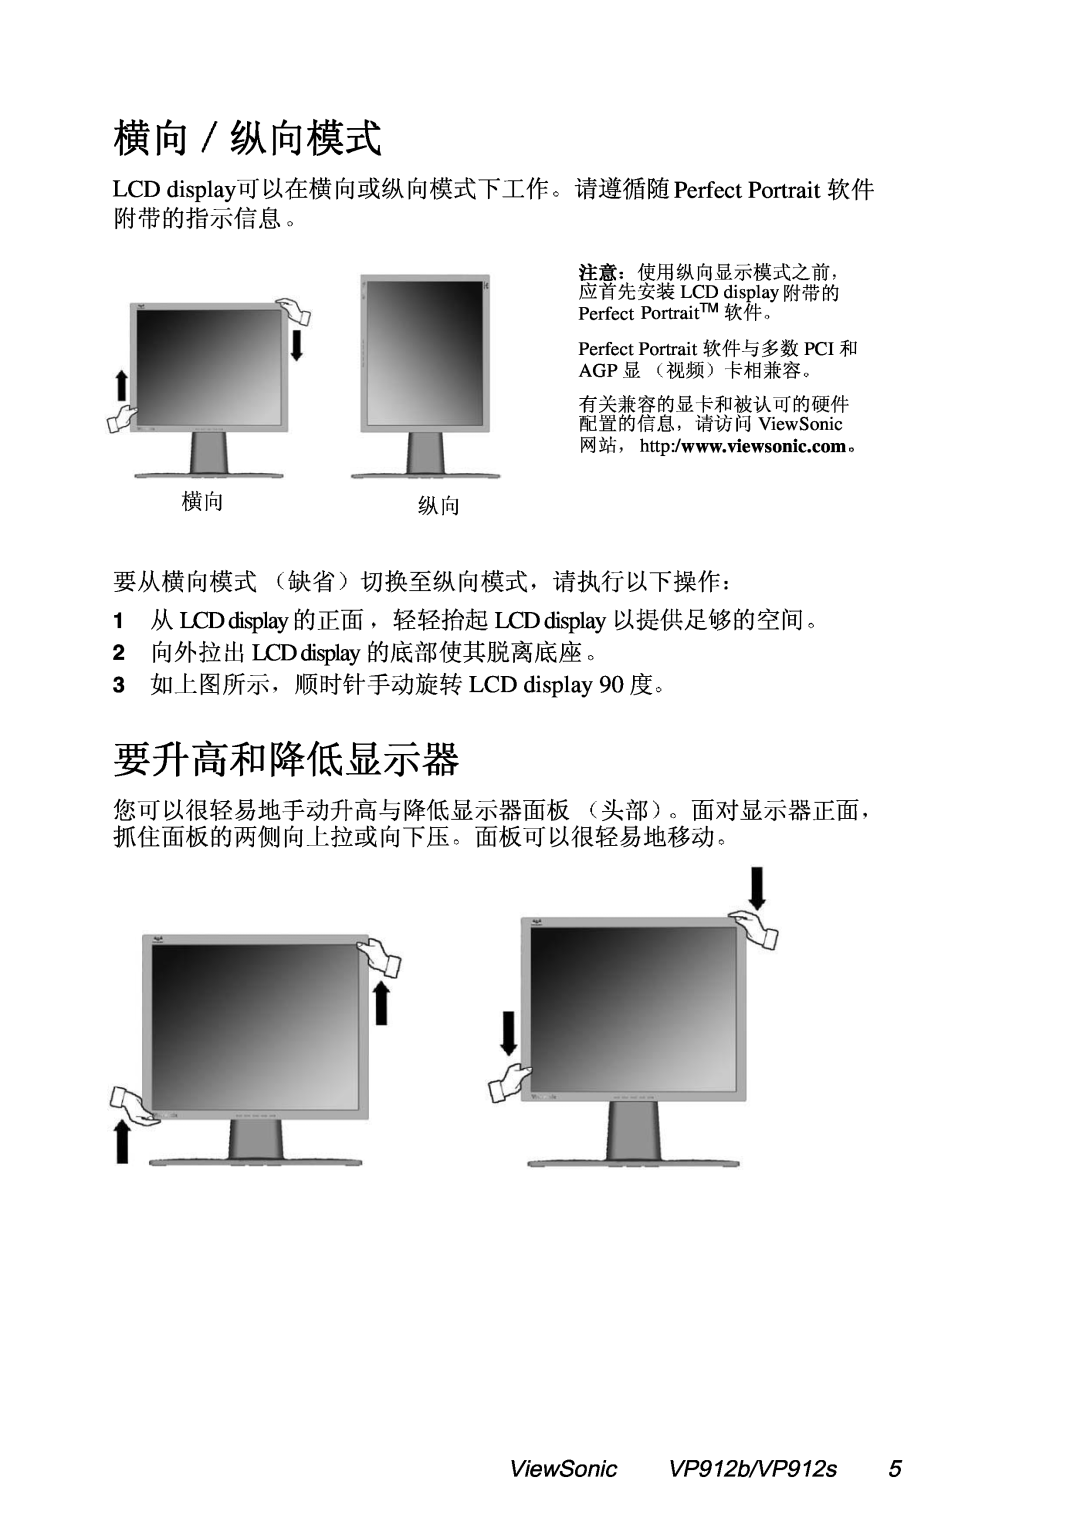 ViewSonic VP912B manual LCD display, ViewSonic VP912b/VP912s, Perfect PortraitTM, AGP ViewSonic 